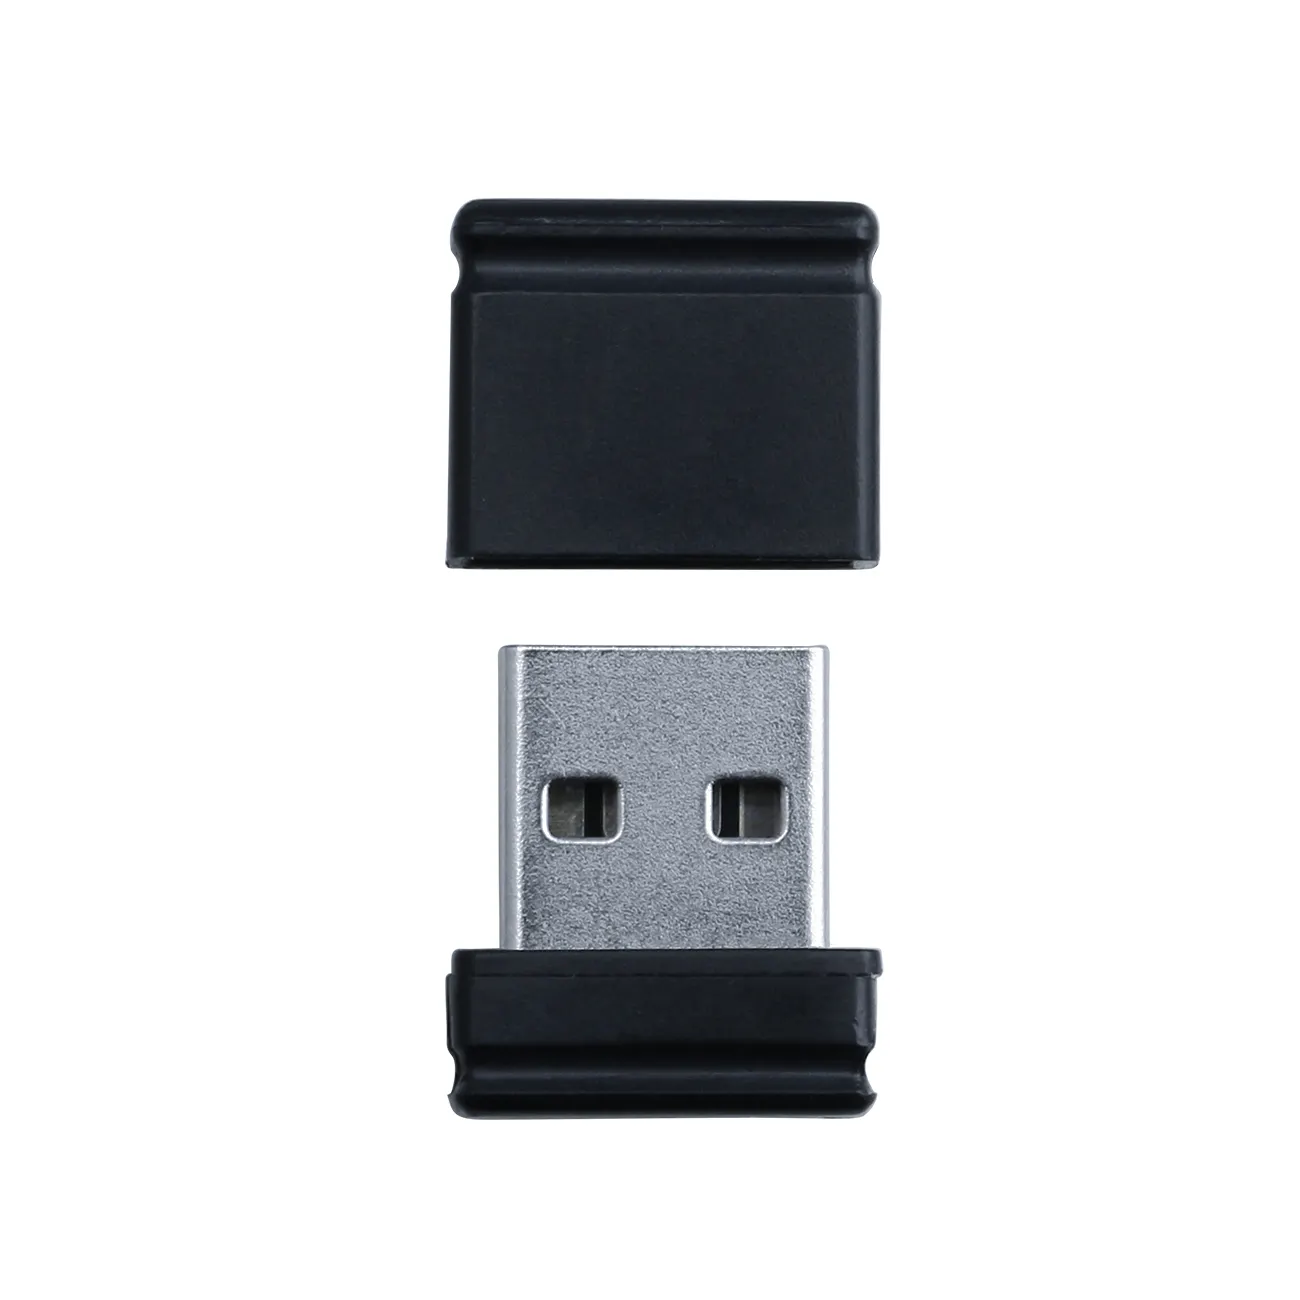 Fabrika fiyat tam kapasite USB Flash sürücü 32GB USB bellek kalem sürücü NANO USB bellek